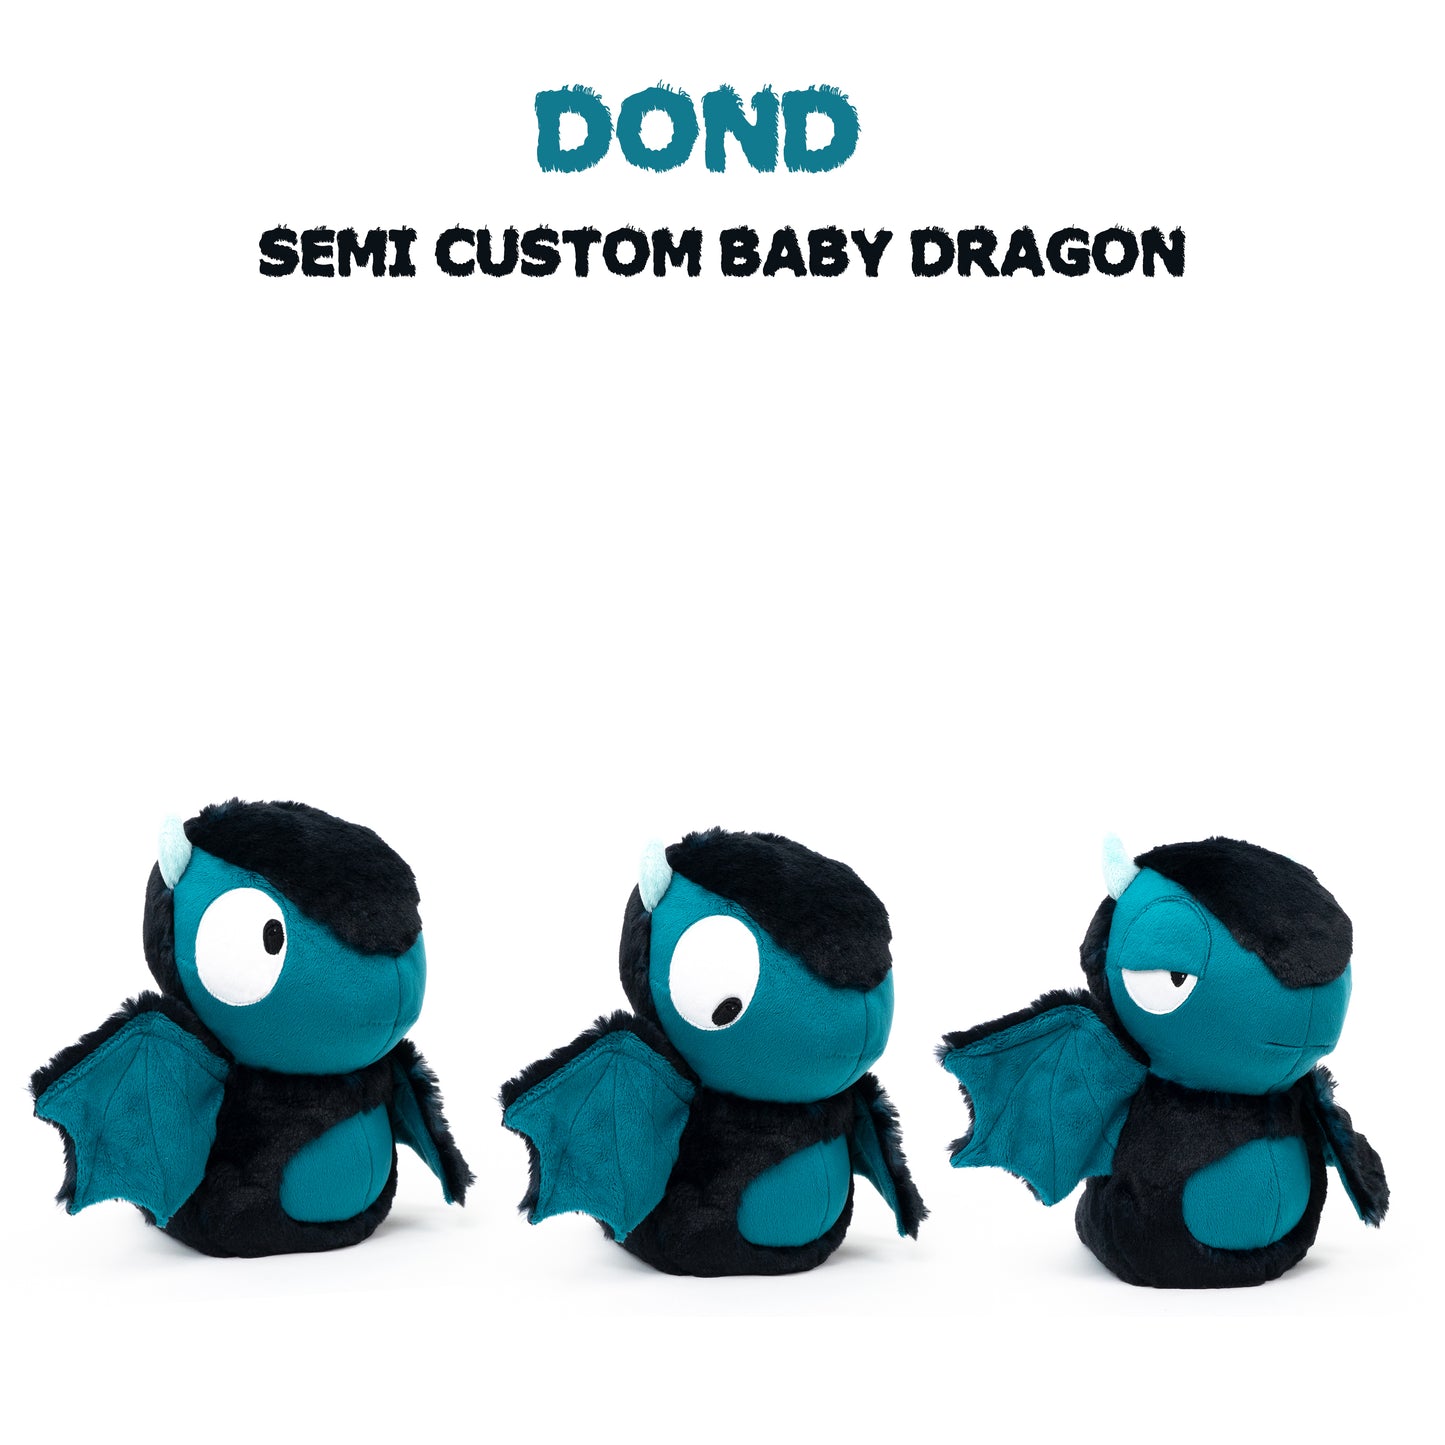 1 plush toy - semi custom BB dragon - reserved